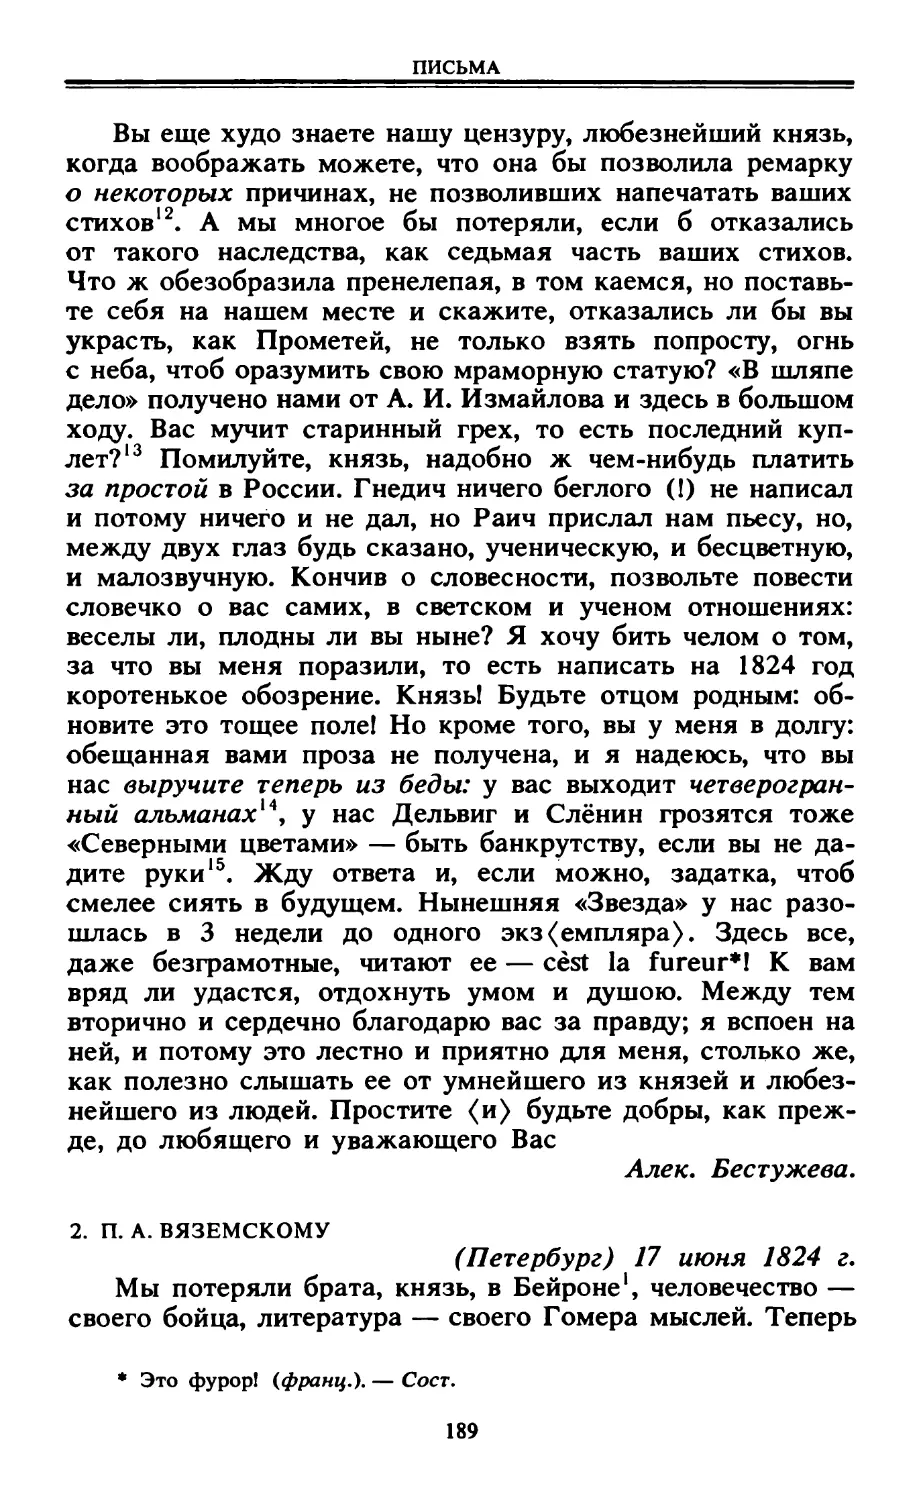 2. П. А. Вяземскому. 17 июня 1824 г.